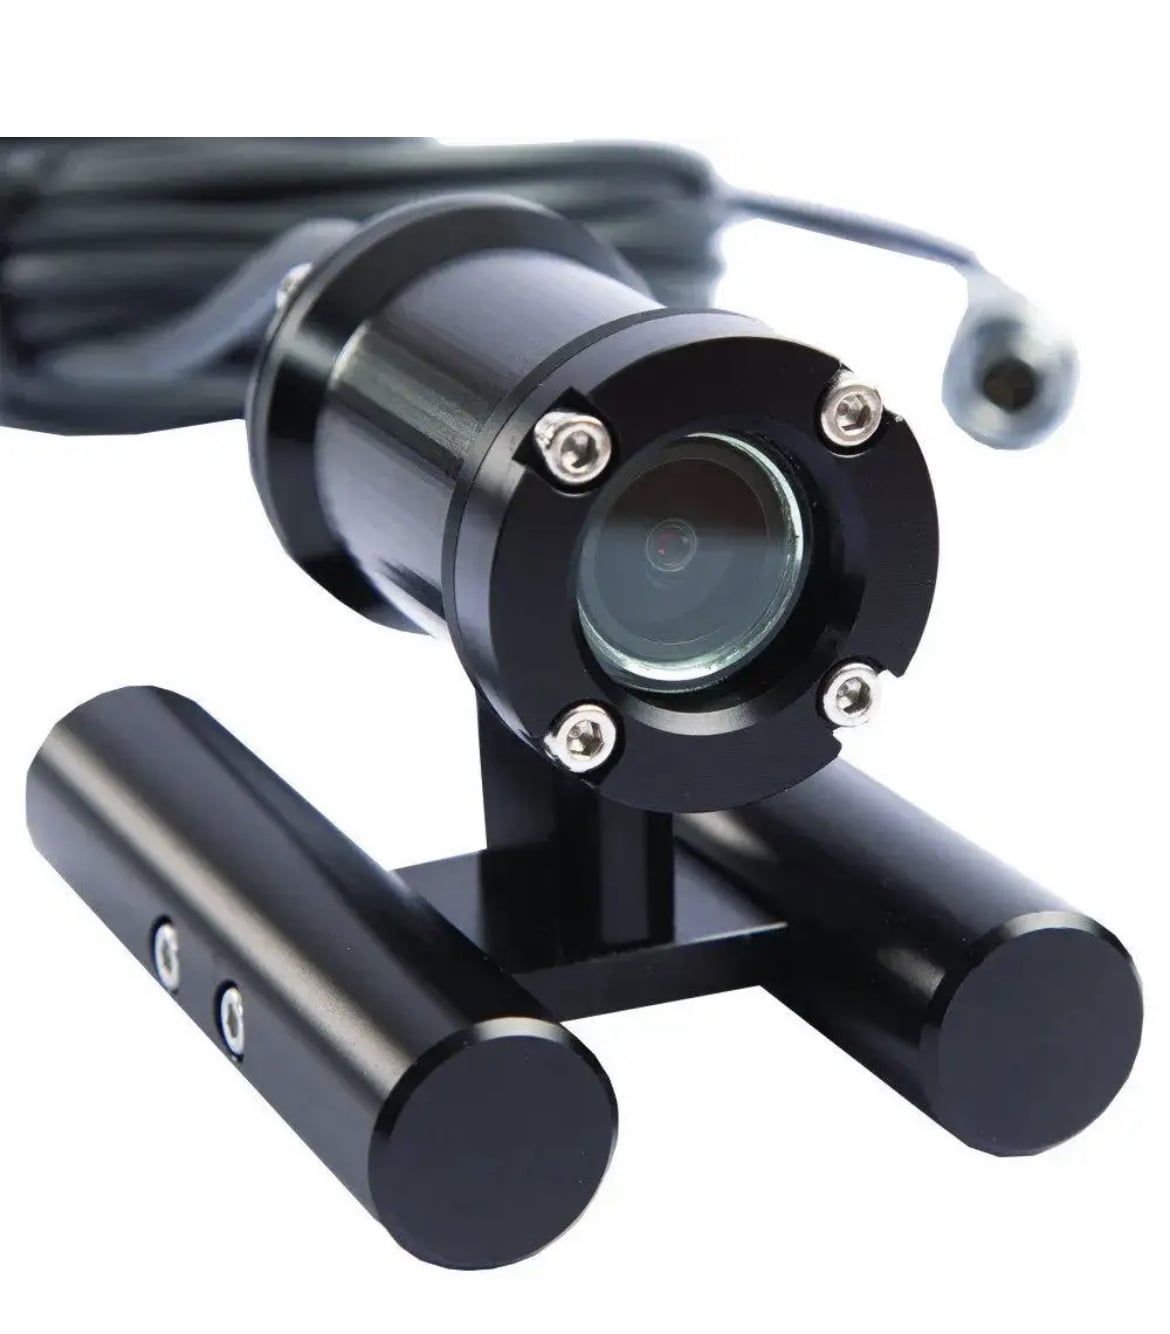 CarpSight MarginCAM+ Realtime Onderwater Camera Fishing Kit